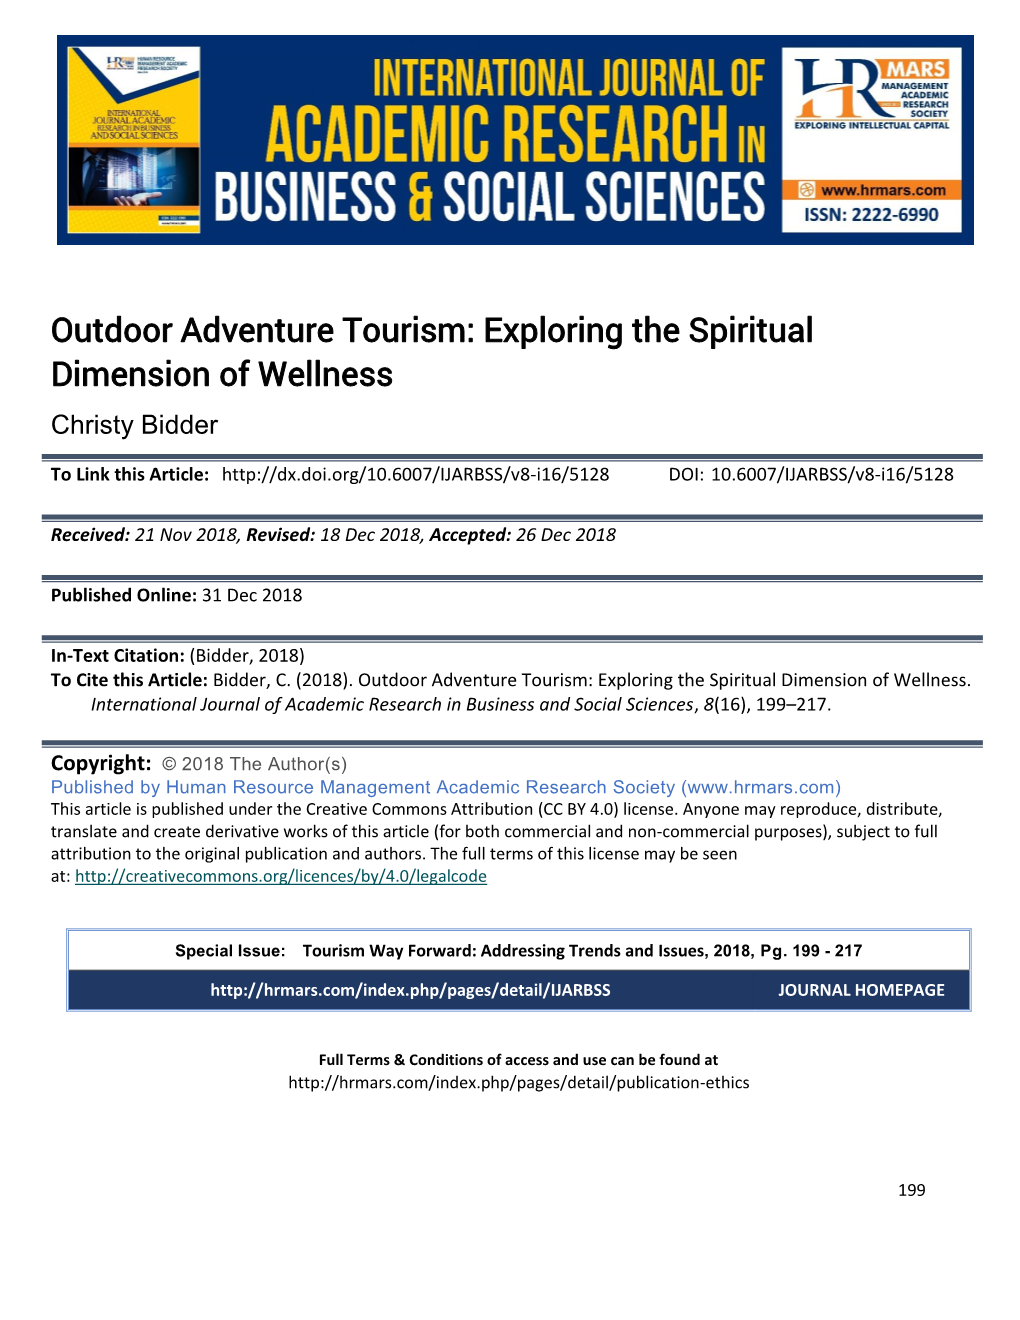 Outdoor Adventure Tourism: Exploring the Spiritual Dimension of Wellness